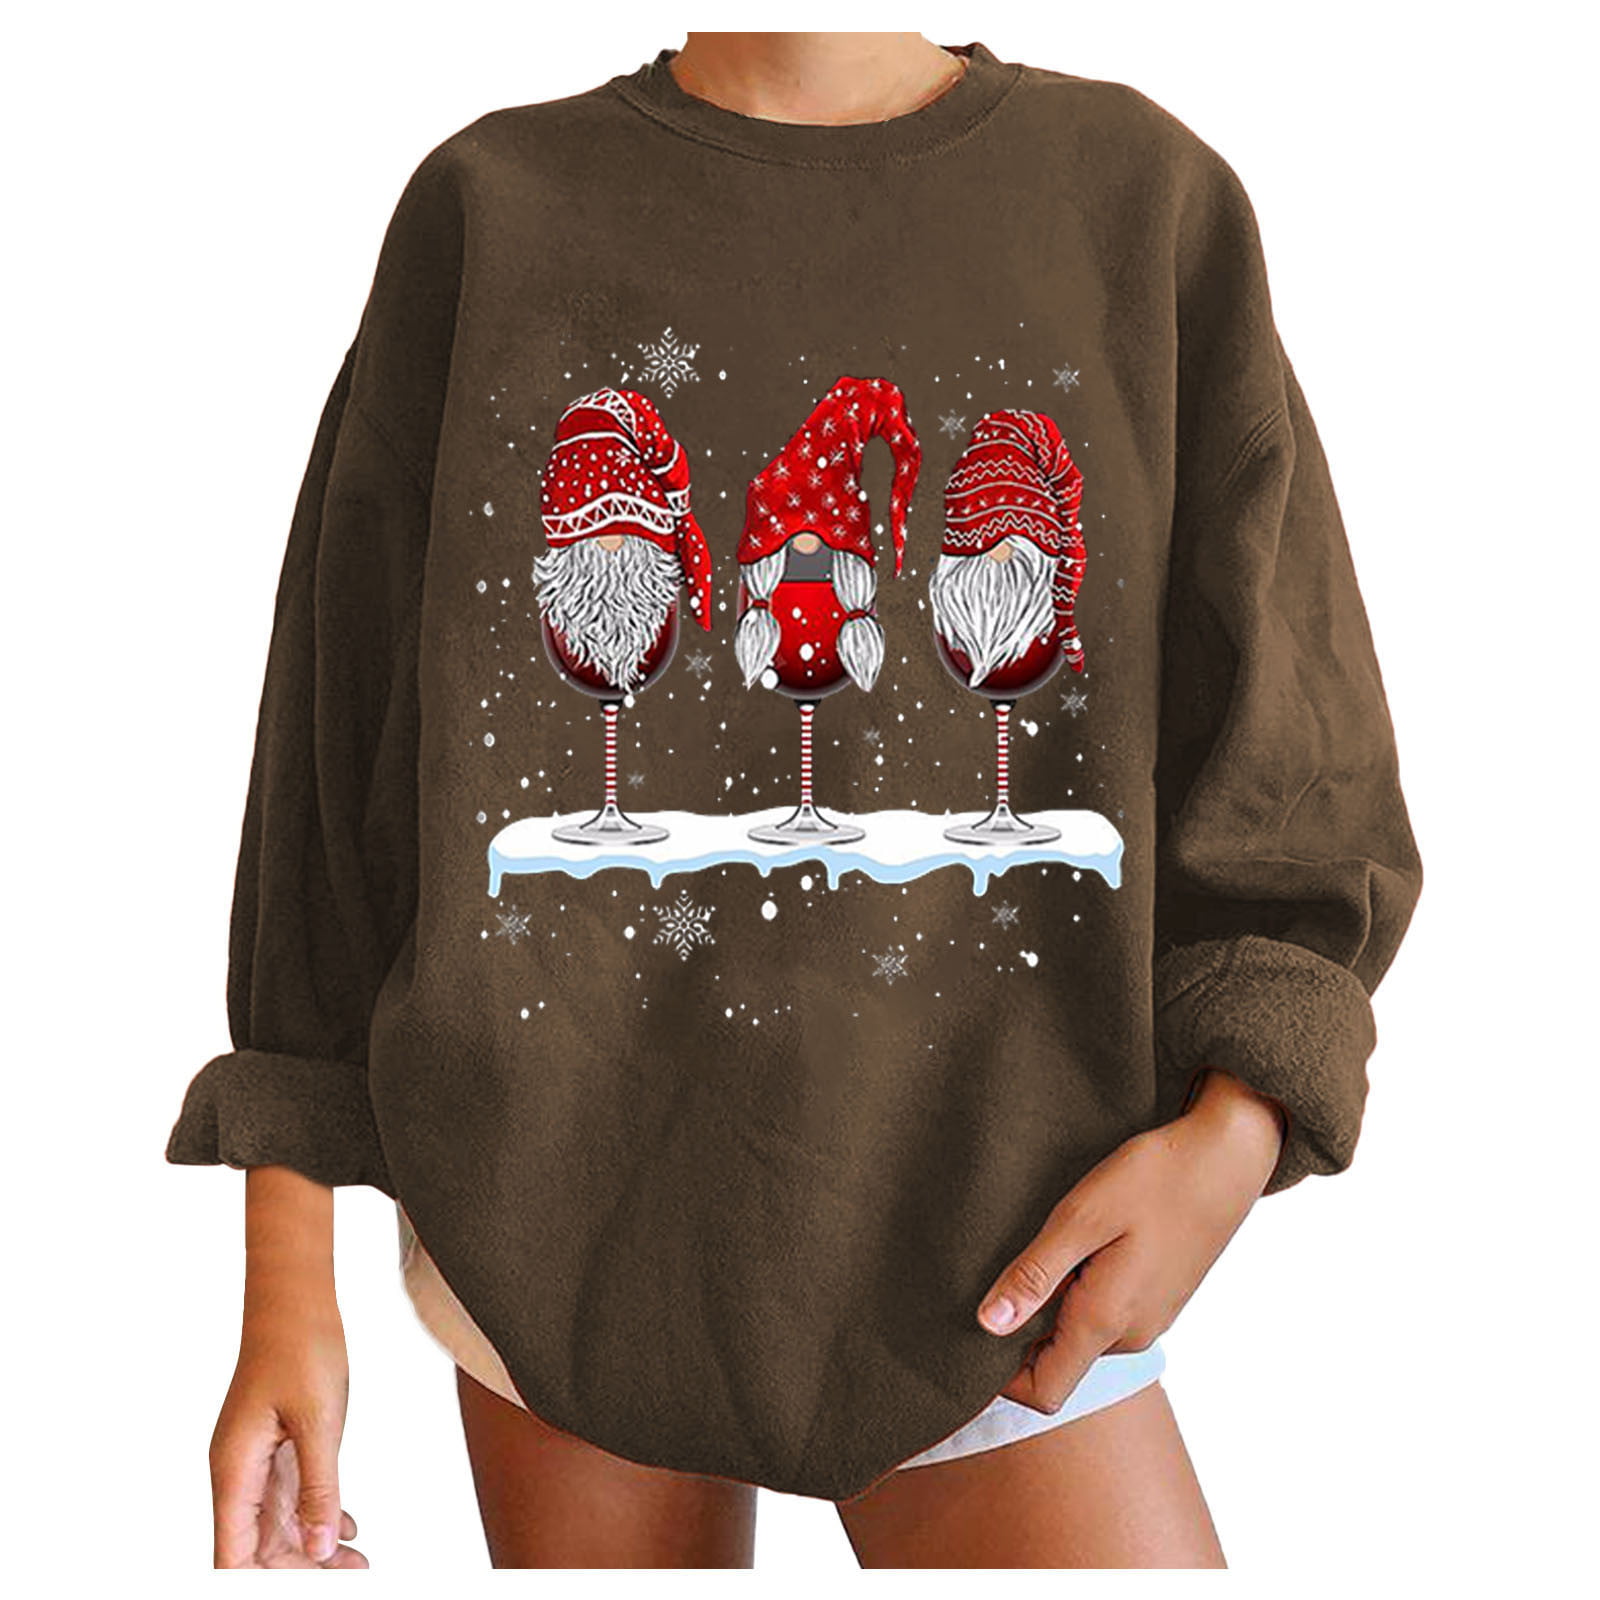 Womens Christmas Long Sleeve Sweatshirt Hooded Pullover Tops Sweater Jumper Sale 